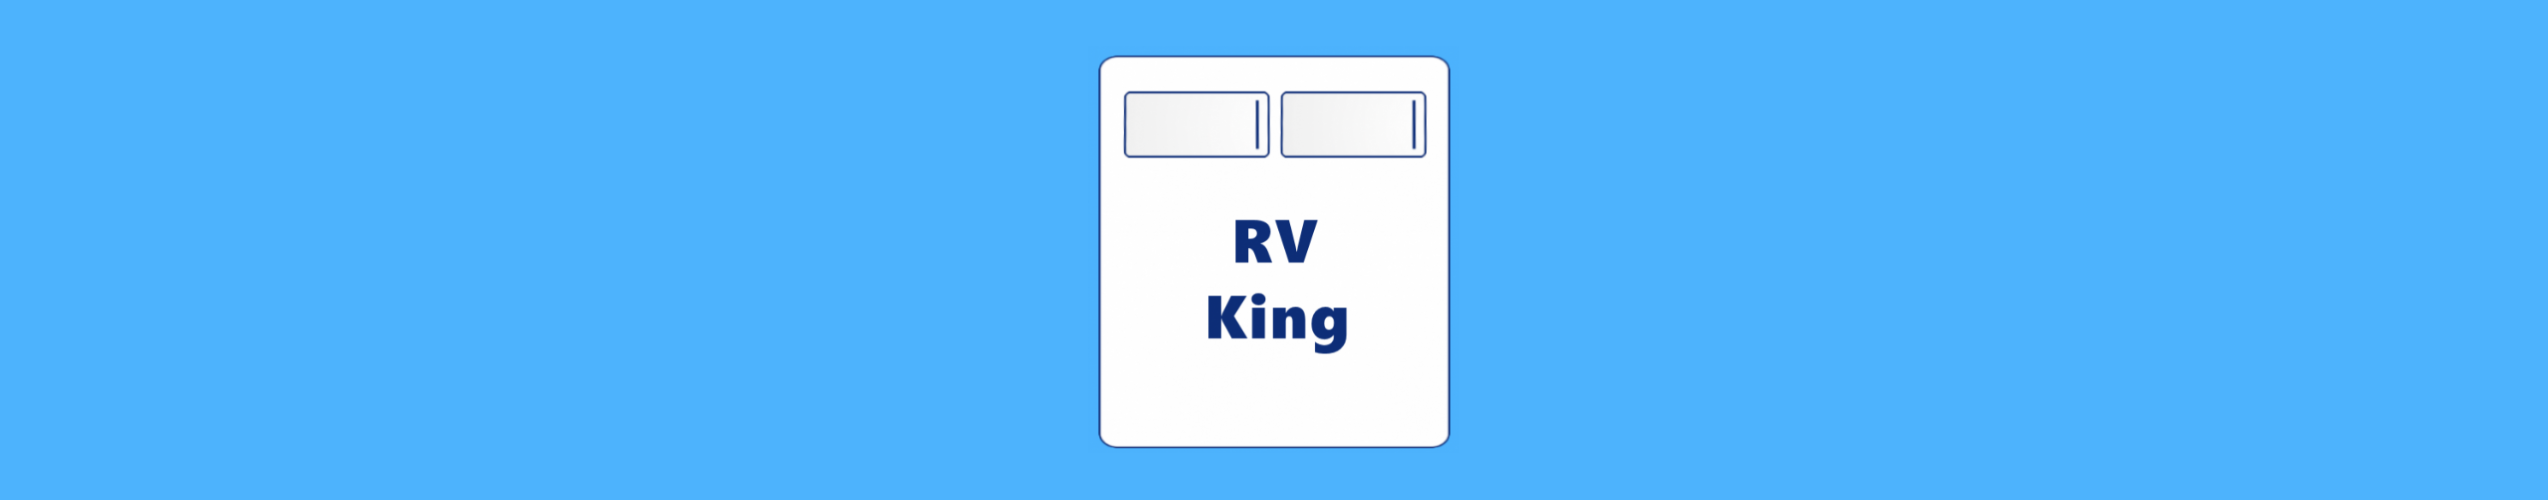 rv king mattress size